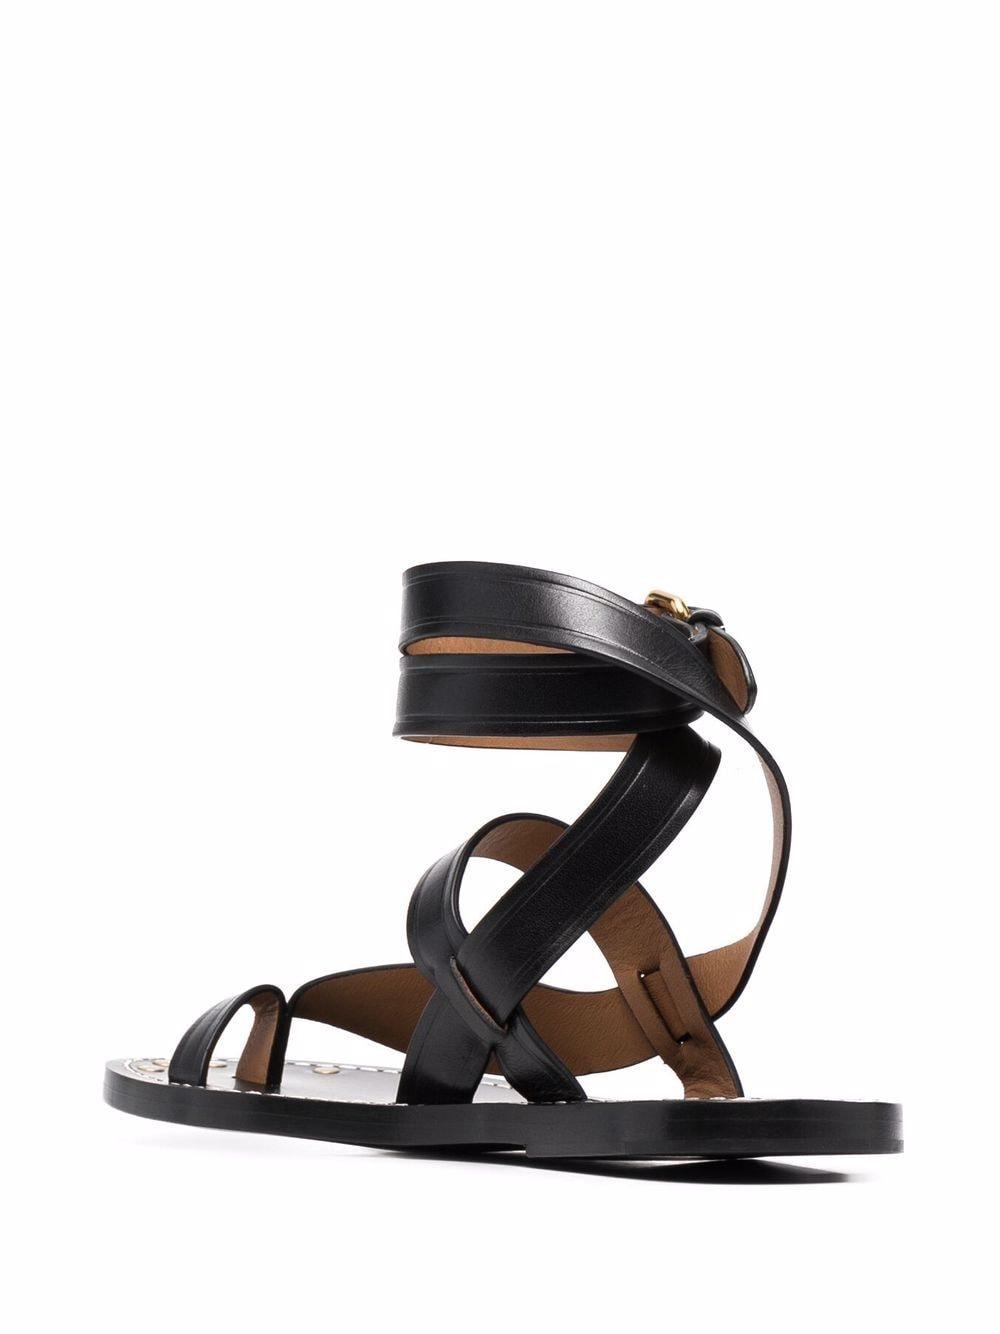 Isabel Marant Jolda Leather Sandals in Black | Lyst